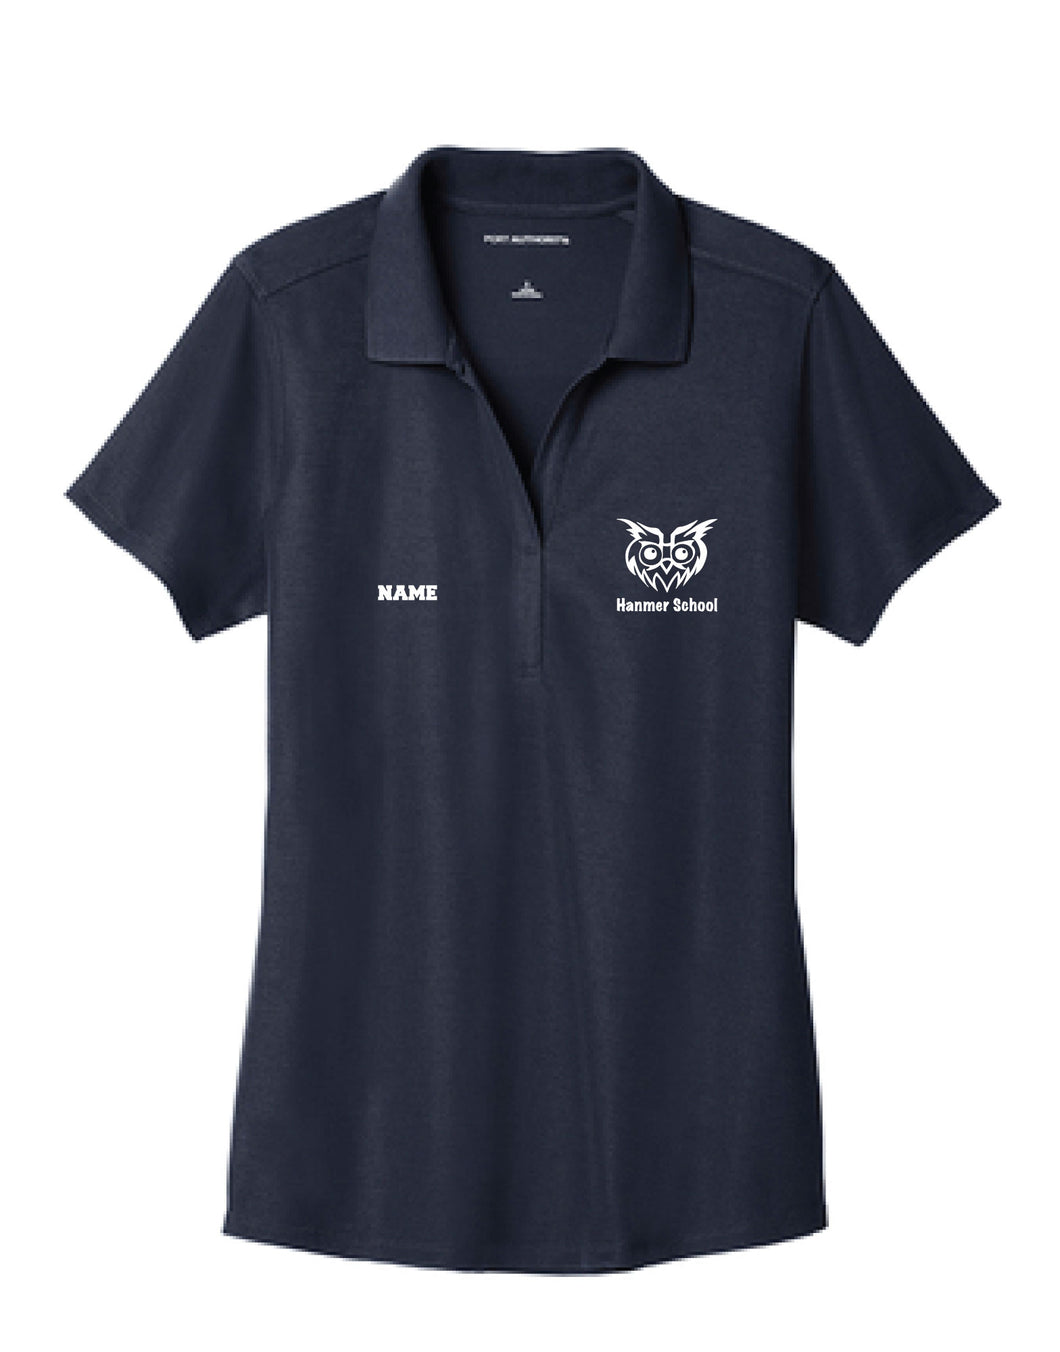 Hanmer School Women's Polo Shirt - Navy - 5KounT